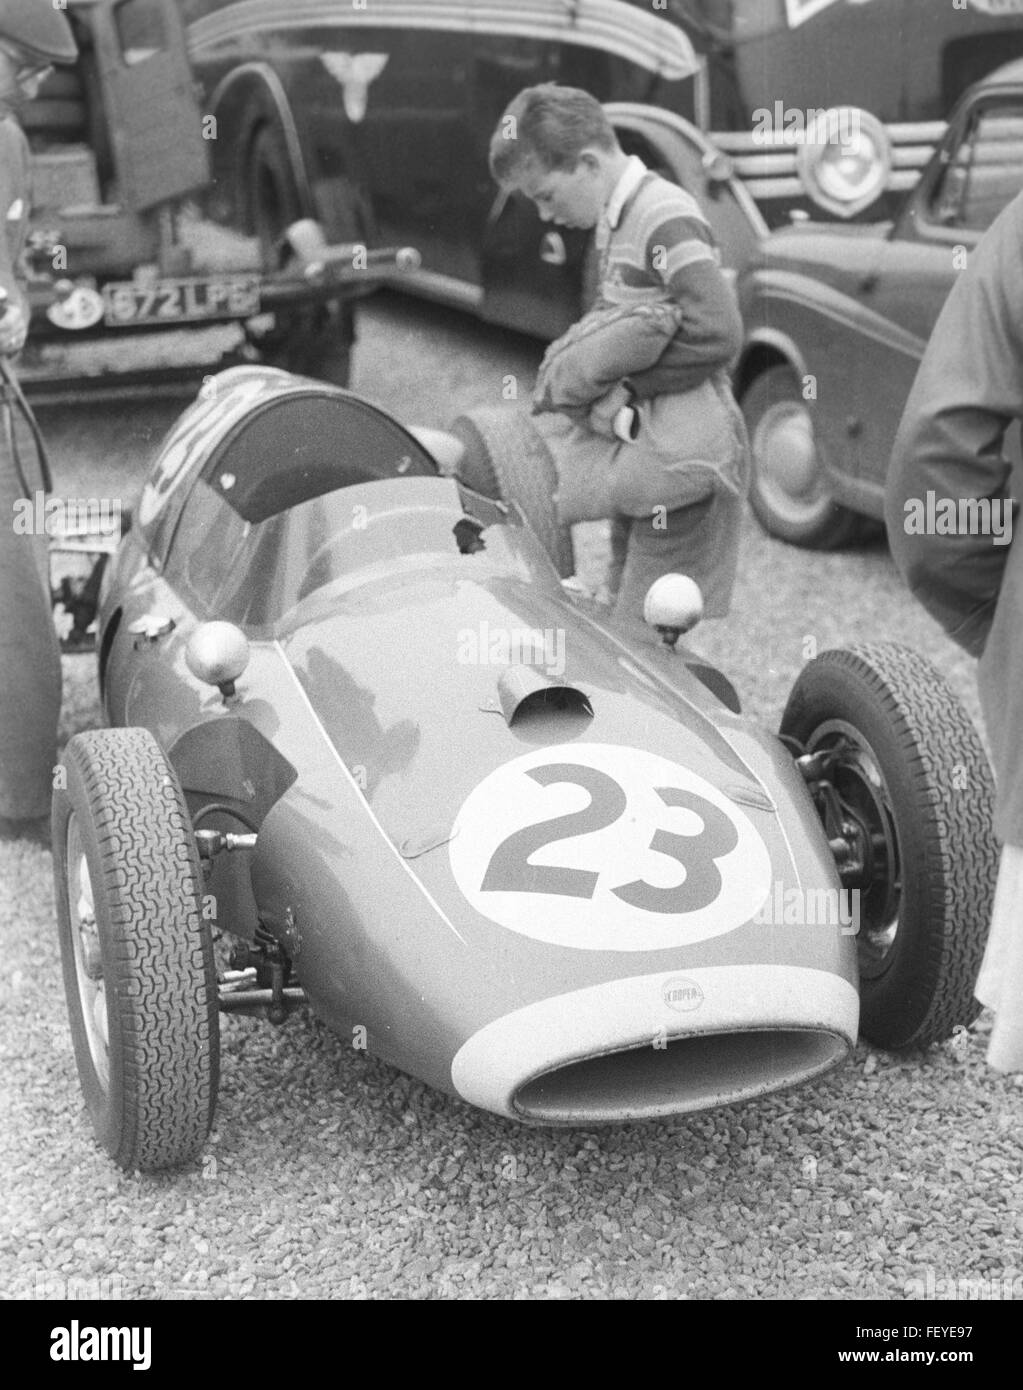 AA 5641. Silverstone, Buckinghamshire, Grand Prix de Grande-Bretagne 1960, Angleterre Banque D'Images